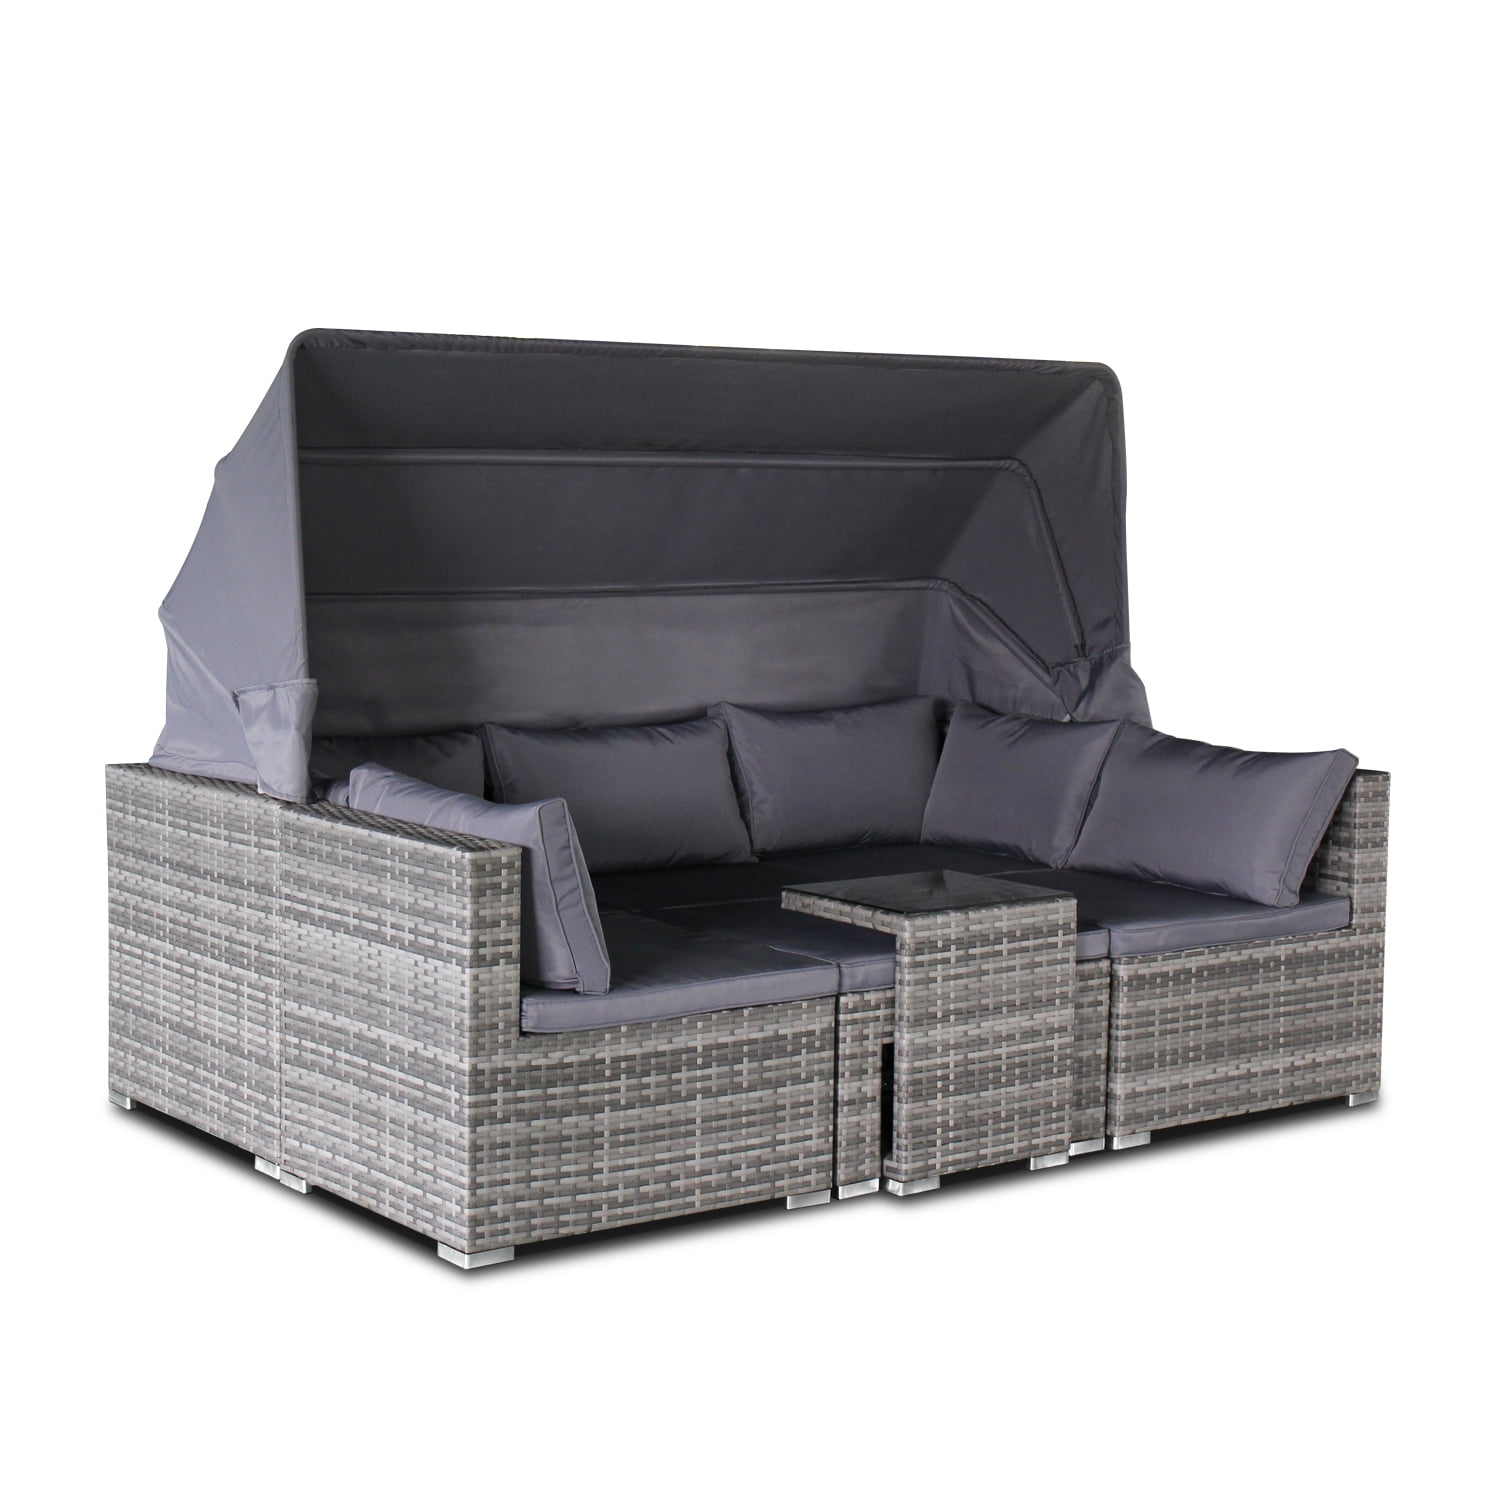 Magari Furniture Ds R403 Complete 5 Piece Wicker Rattan Pool Patio Garden Set With Cushions Grey Walmart Com Walmart Com